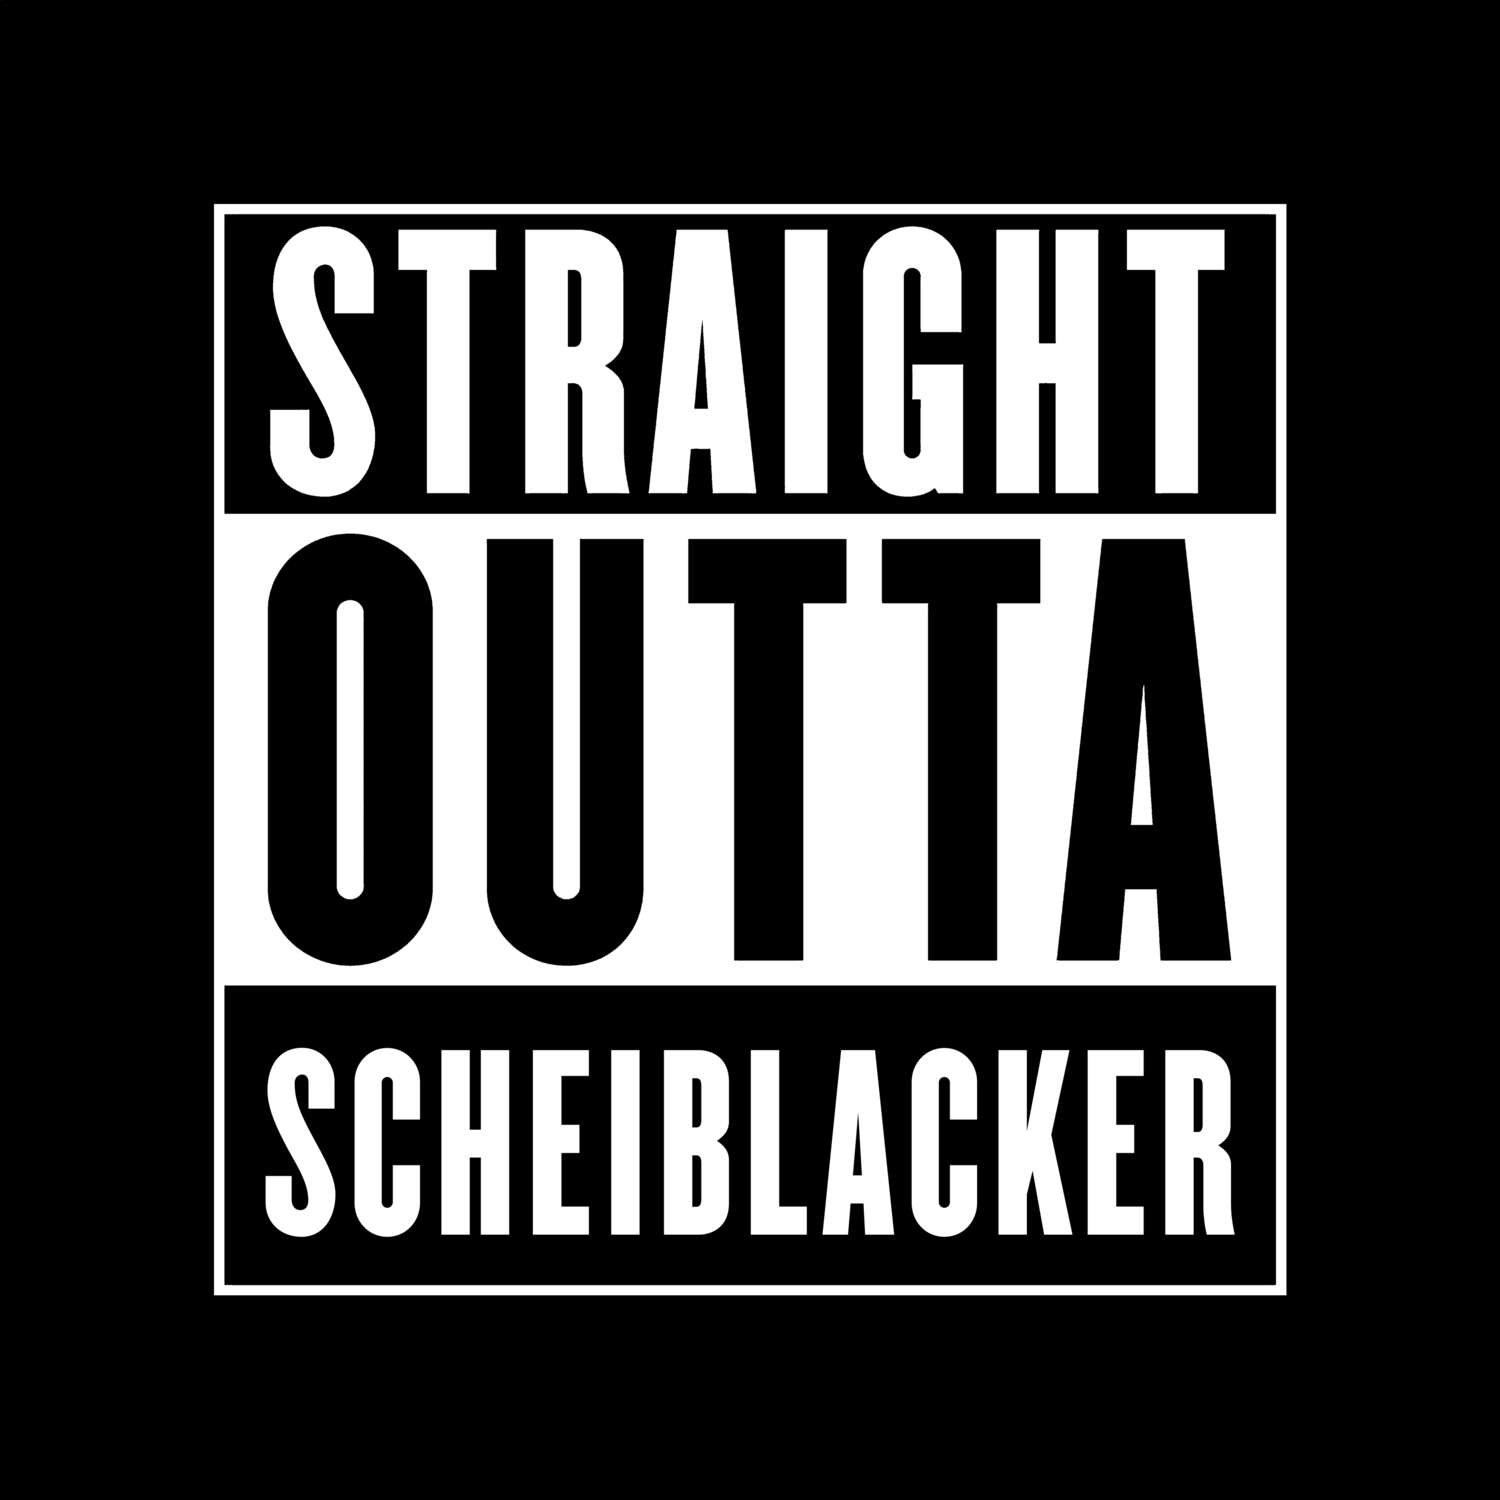 Scheiblacker T-Shirt »Straight Outta«